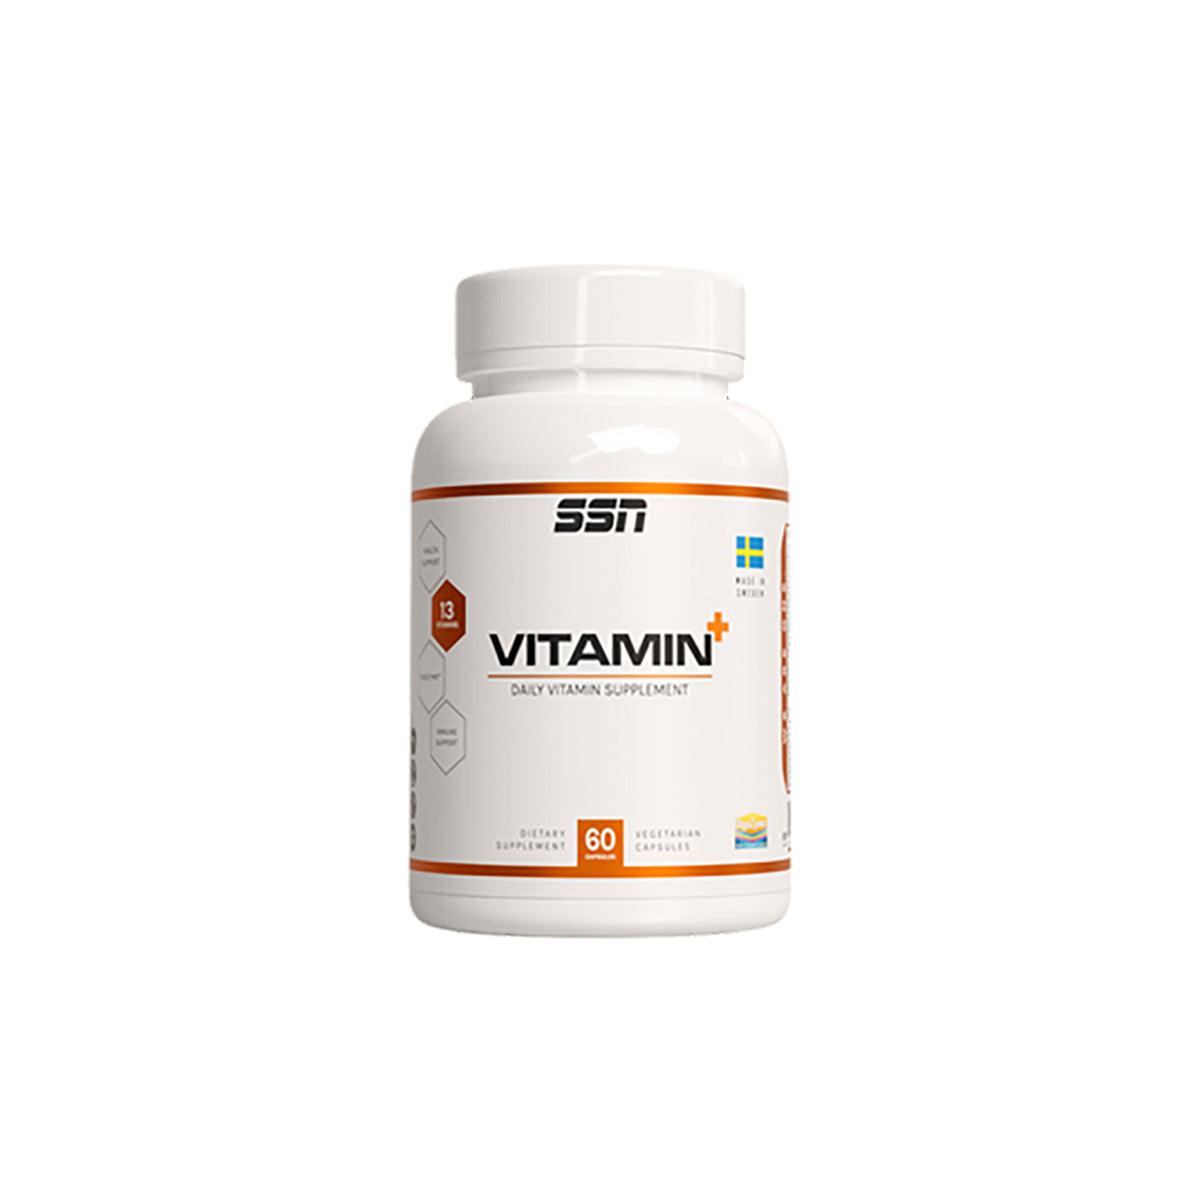 SSN Vitamin+ 60 kapslar